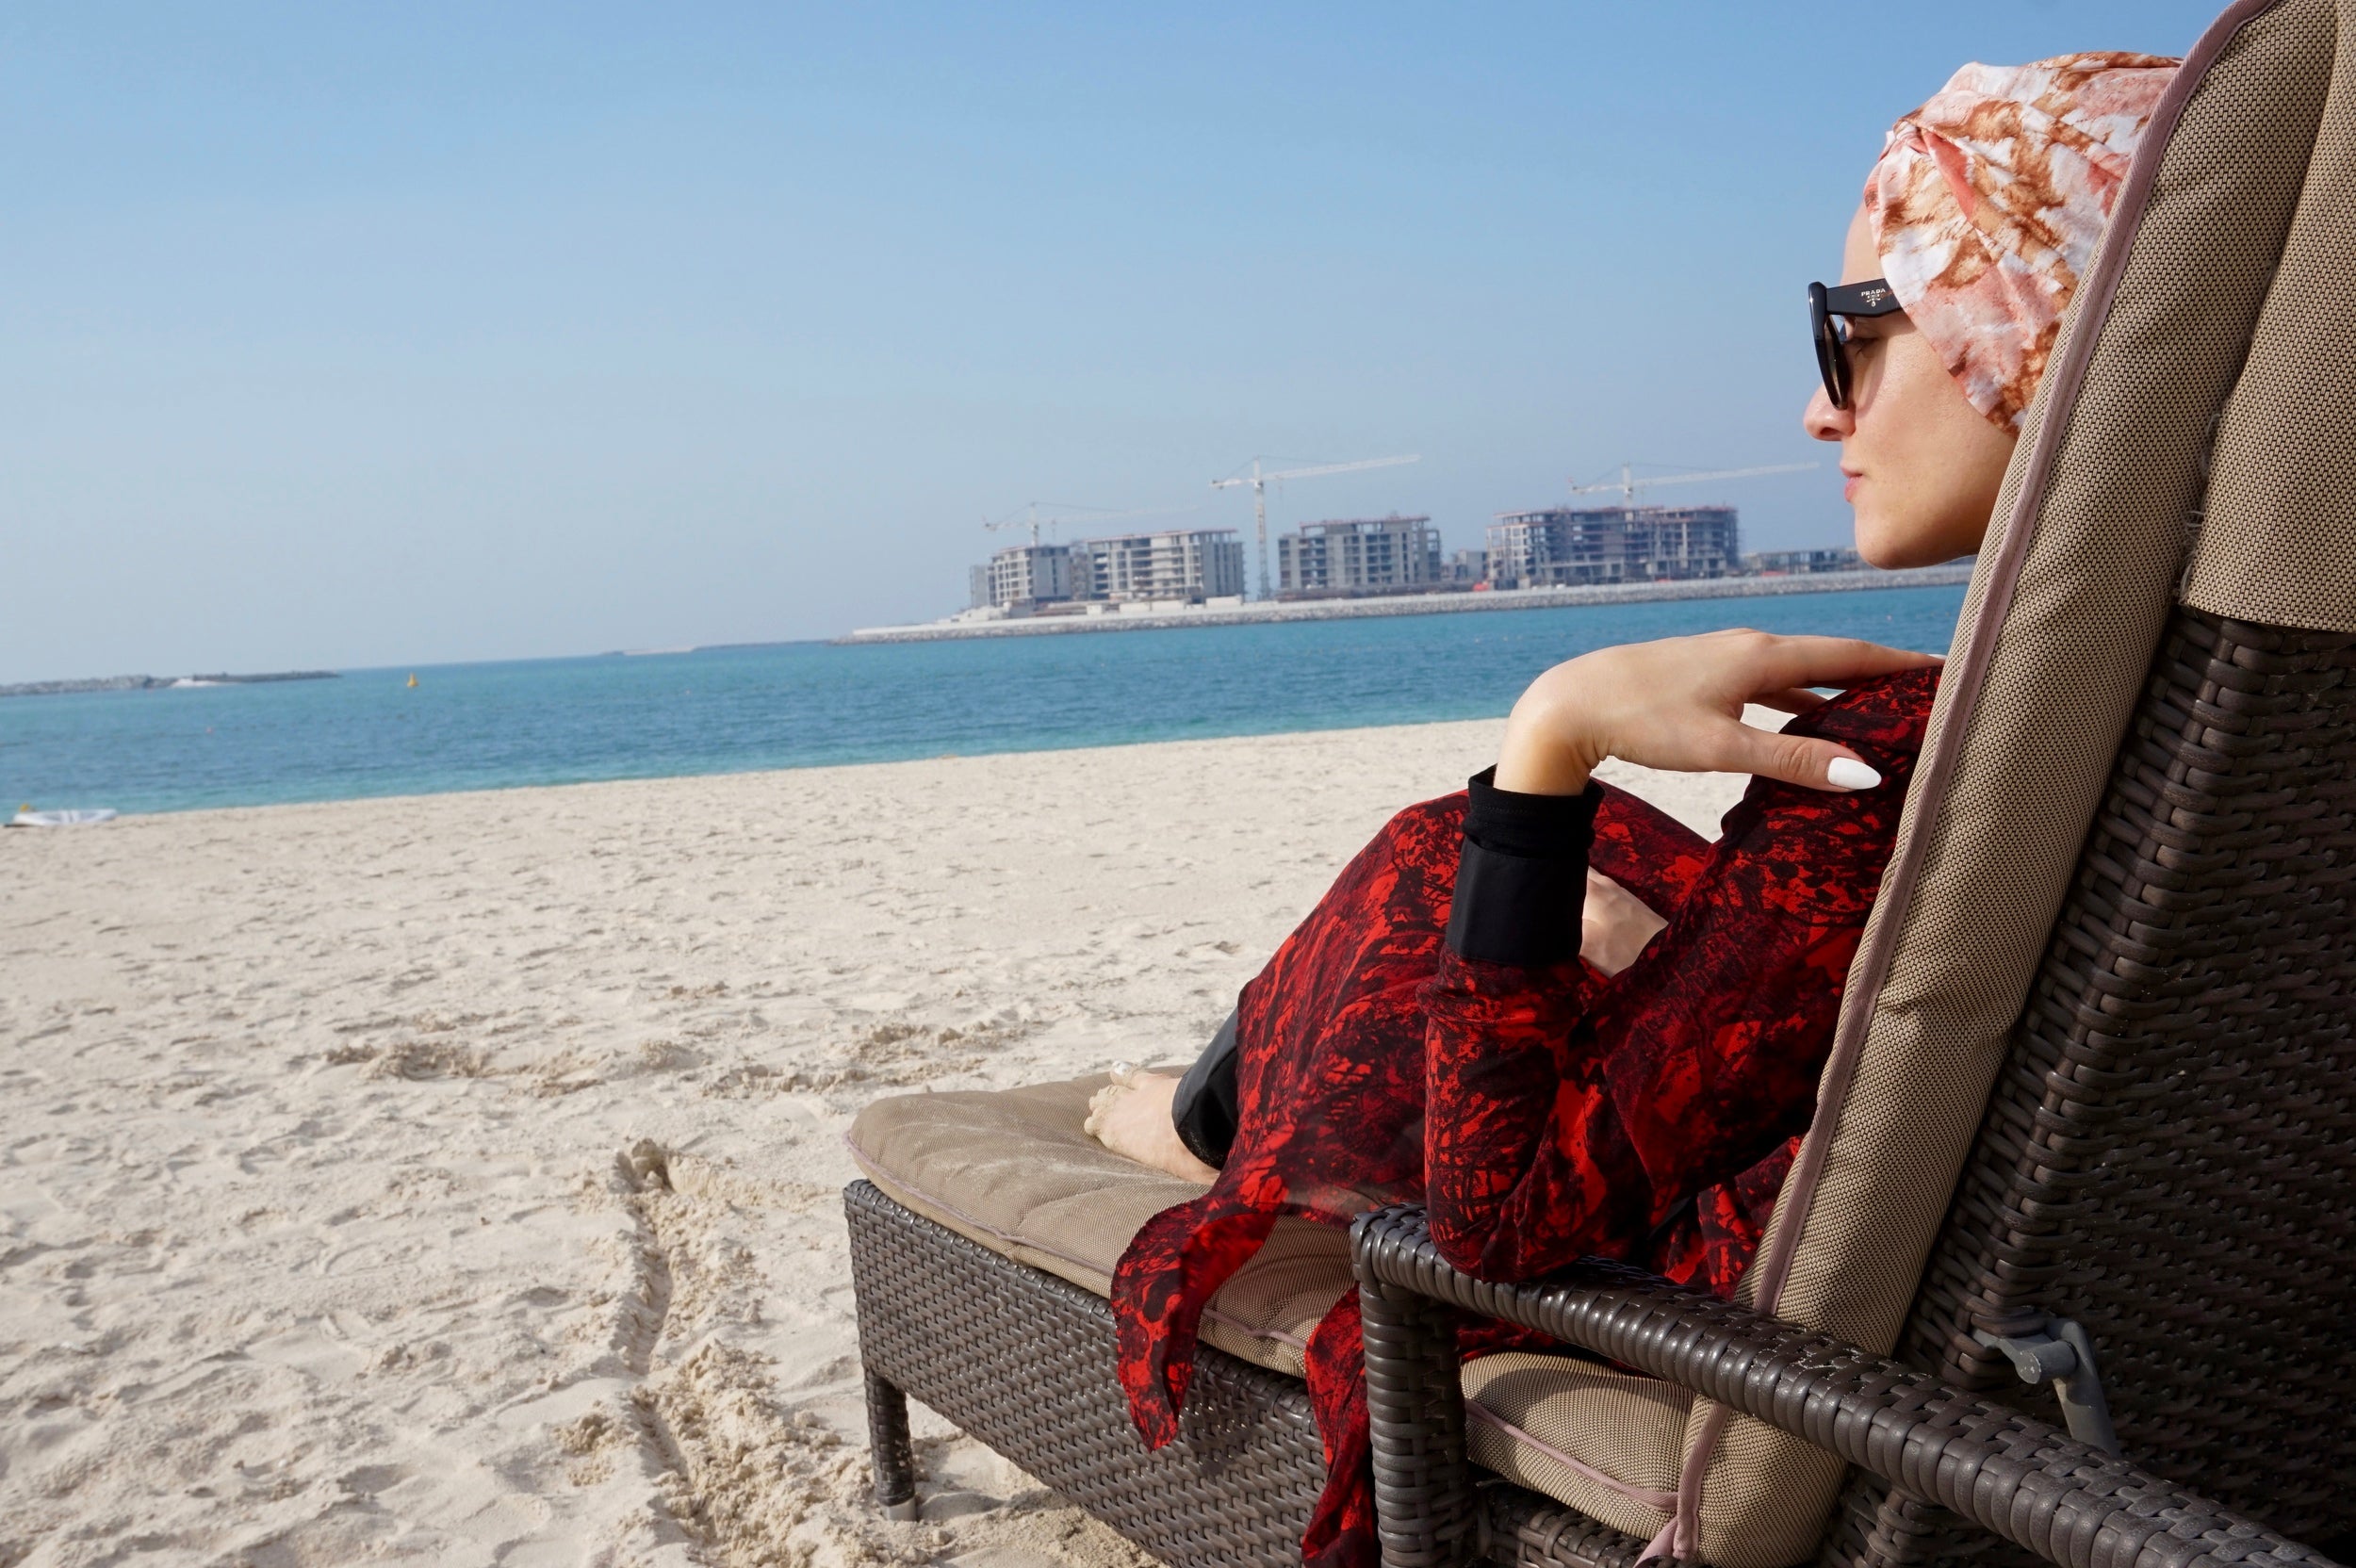 DUBAI VLOG | PART IV - Women's Private Beach!